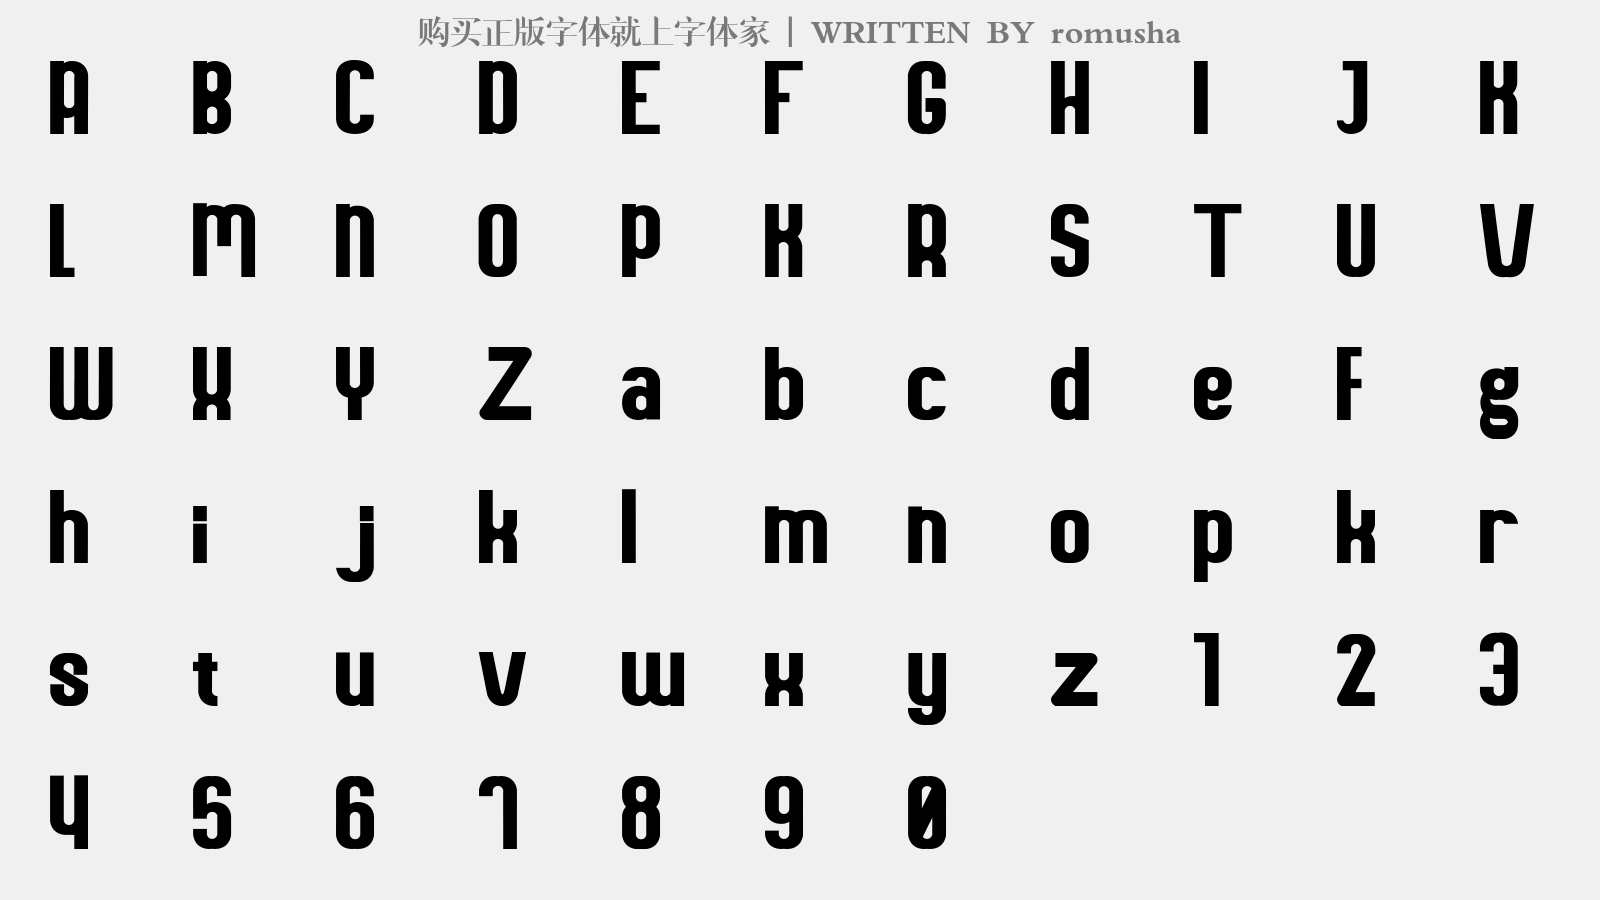 romusha - 大写字母/小写字母/数字